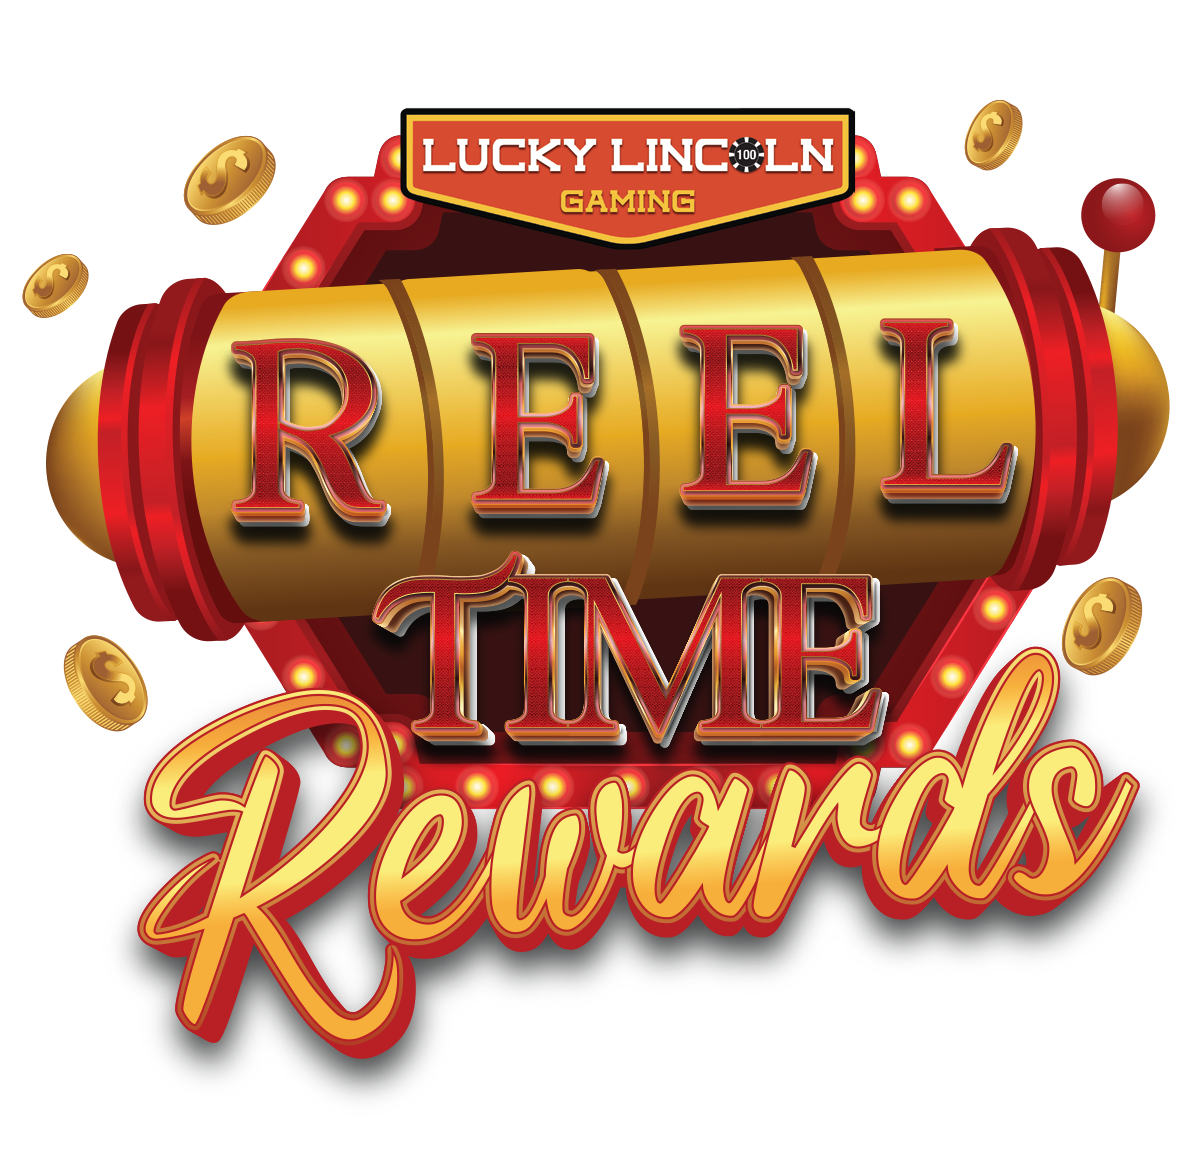 Reel Time Rewards